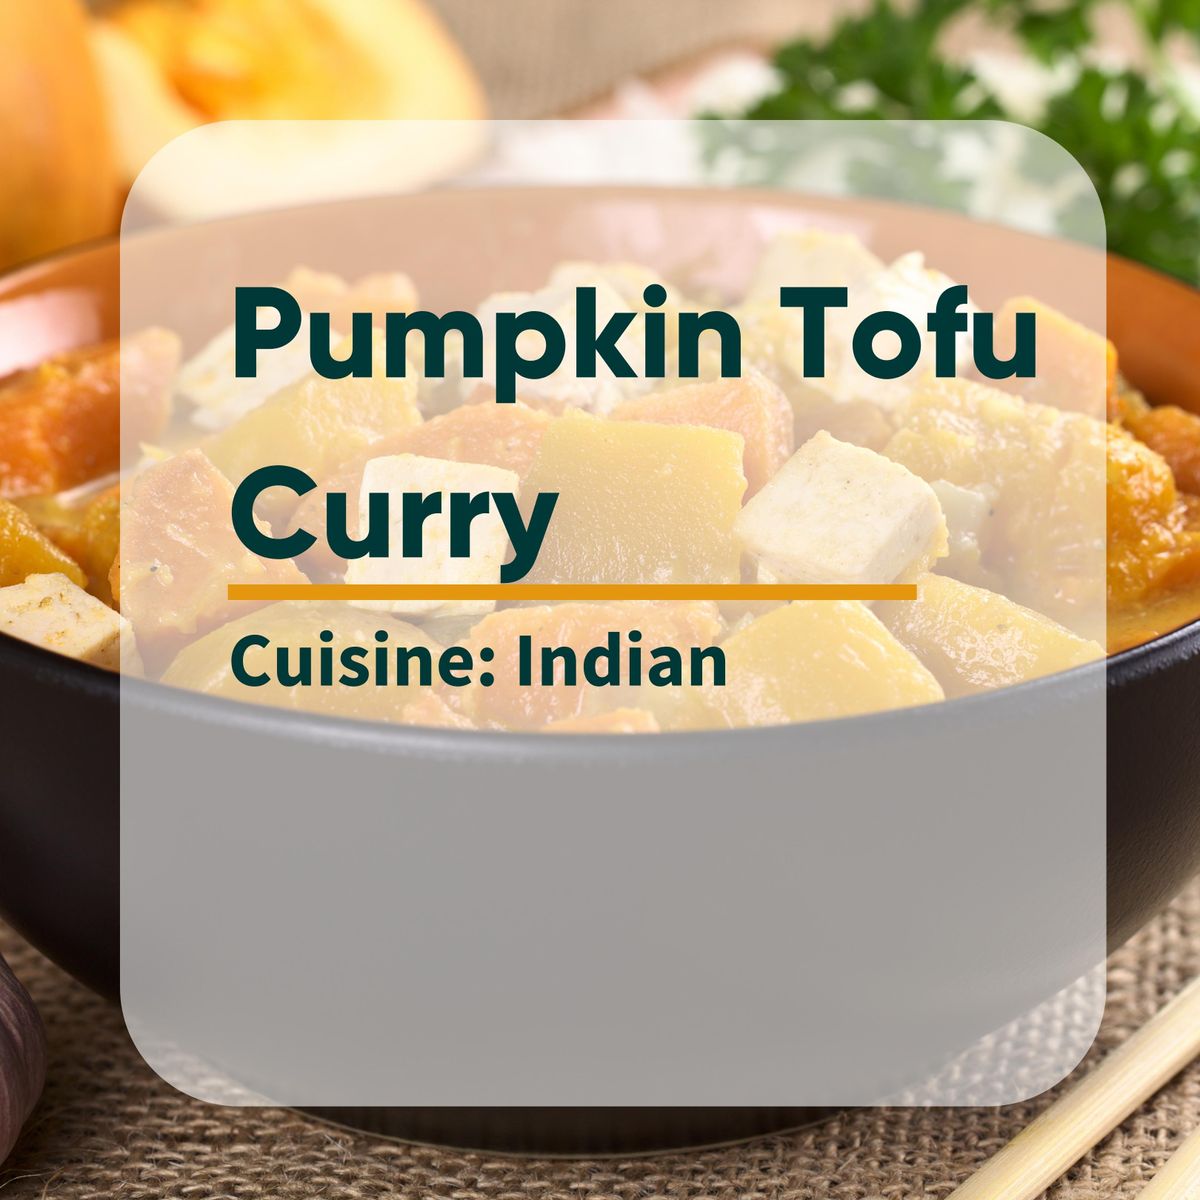 Pumpkin Tofu Curry Image